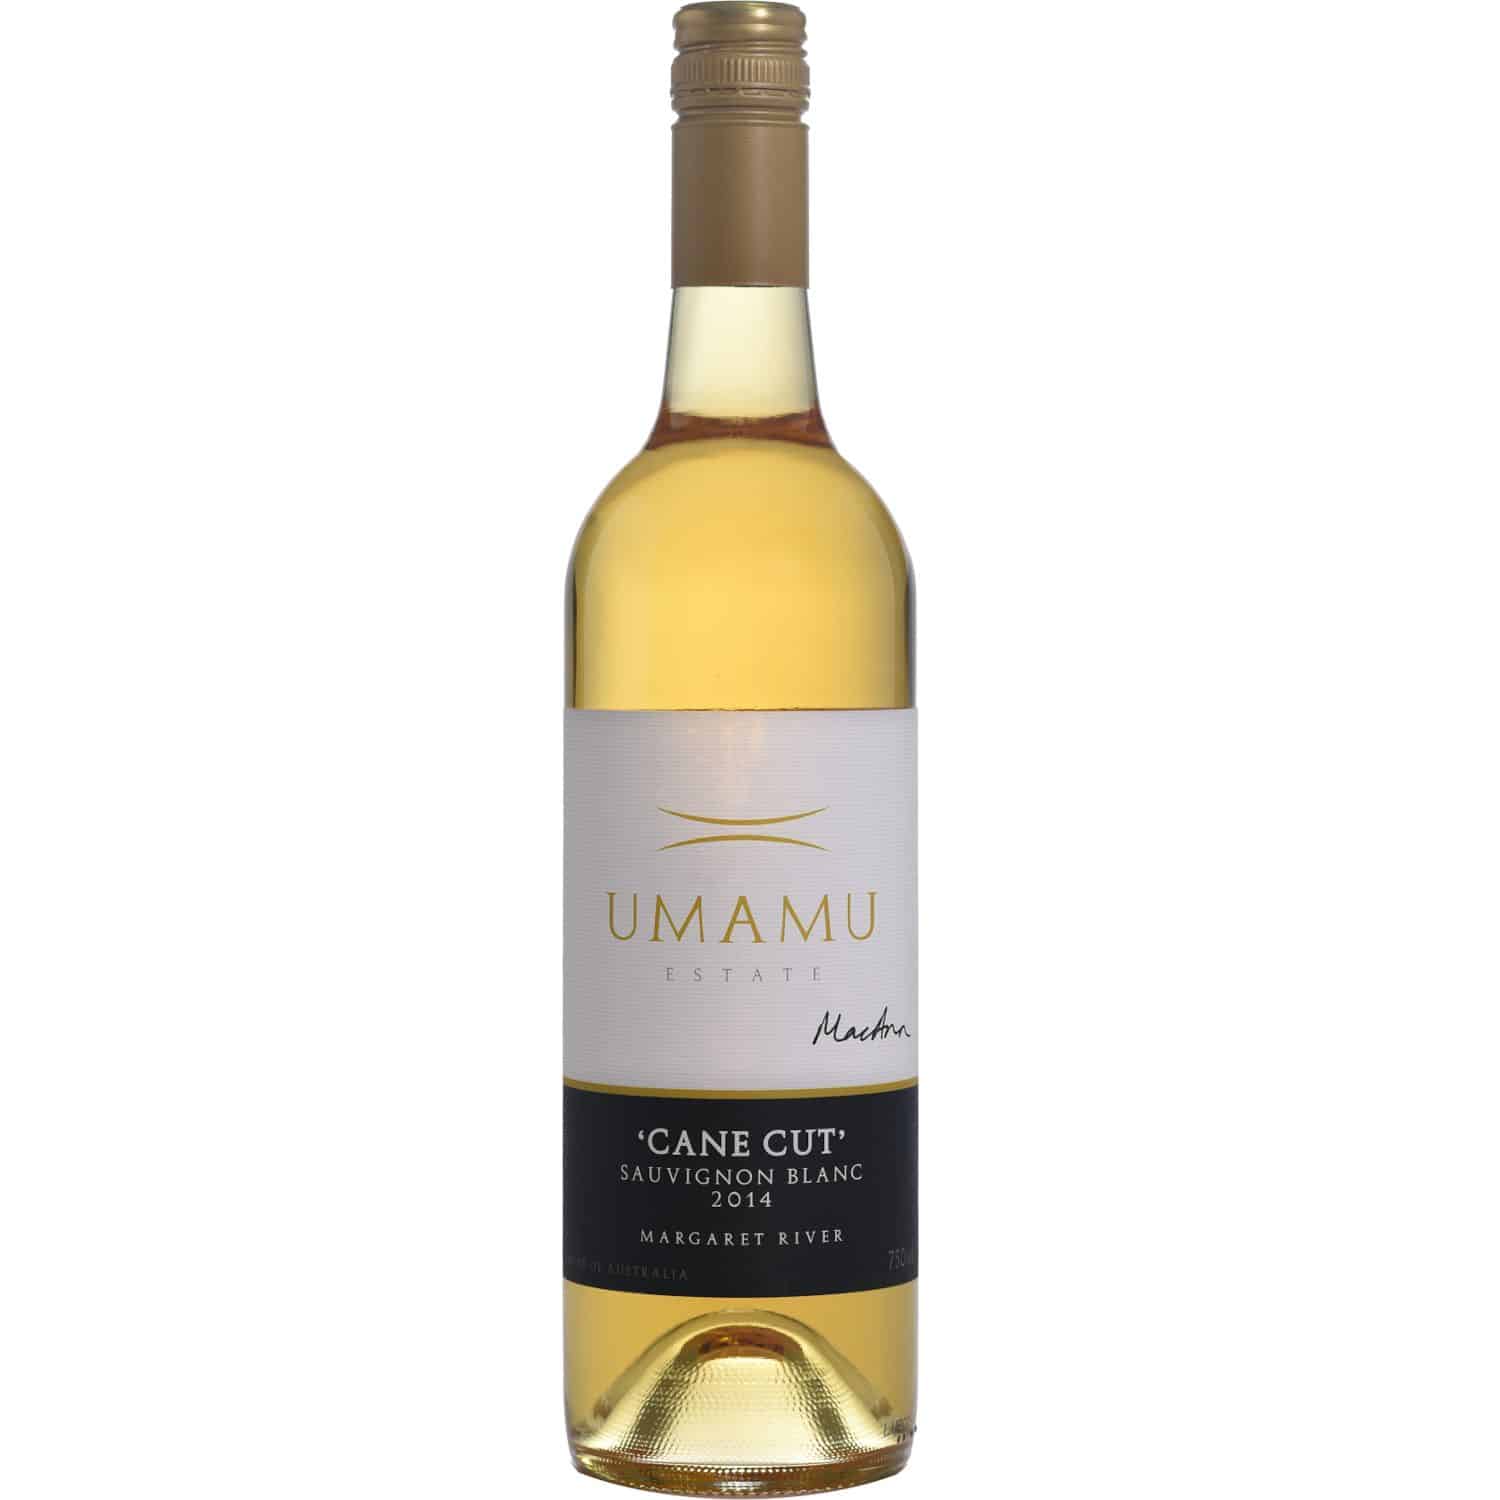 Umamu Estate Cane Cut Sauvignon Blanc 2014